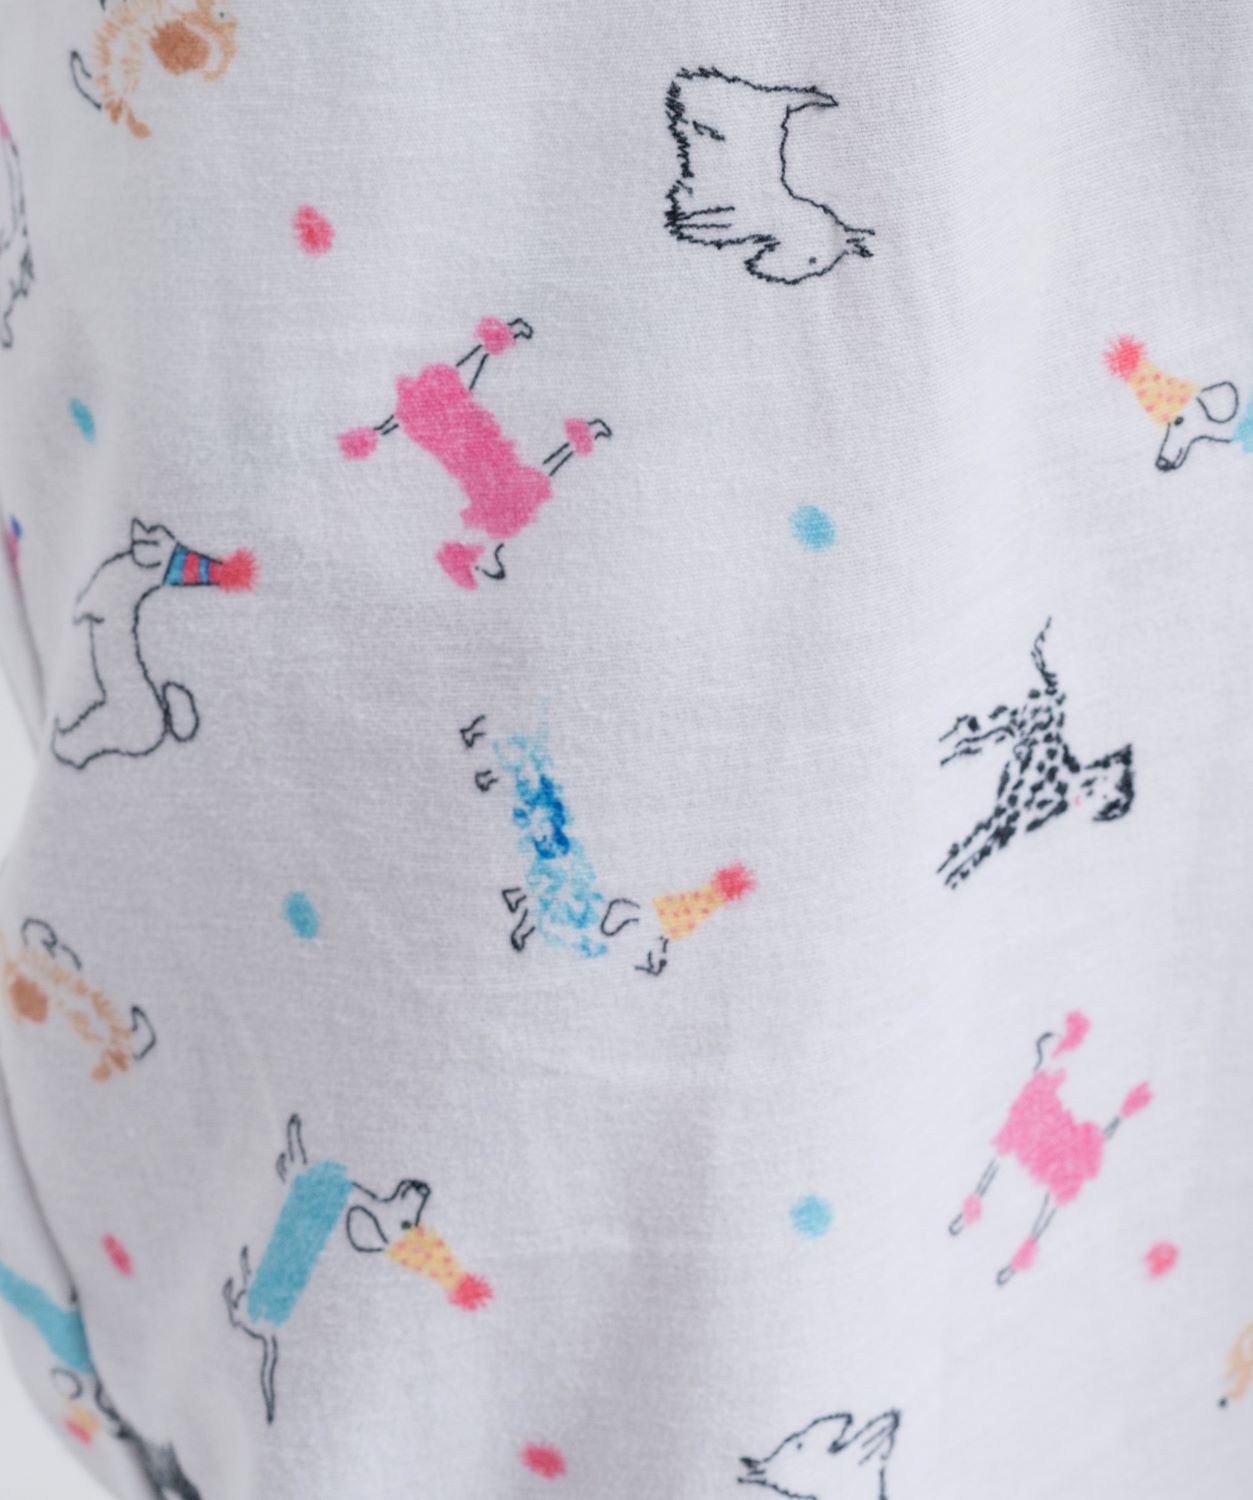 Kids Woof Brushed Cotton Pyjamas - Slouchy